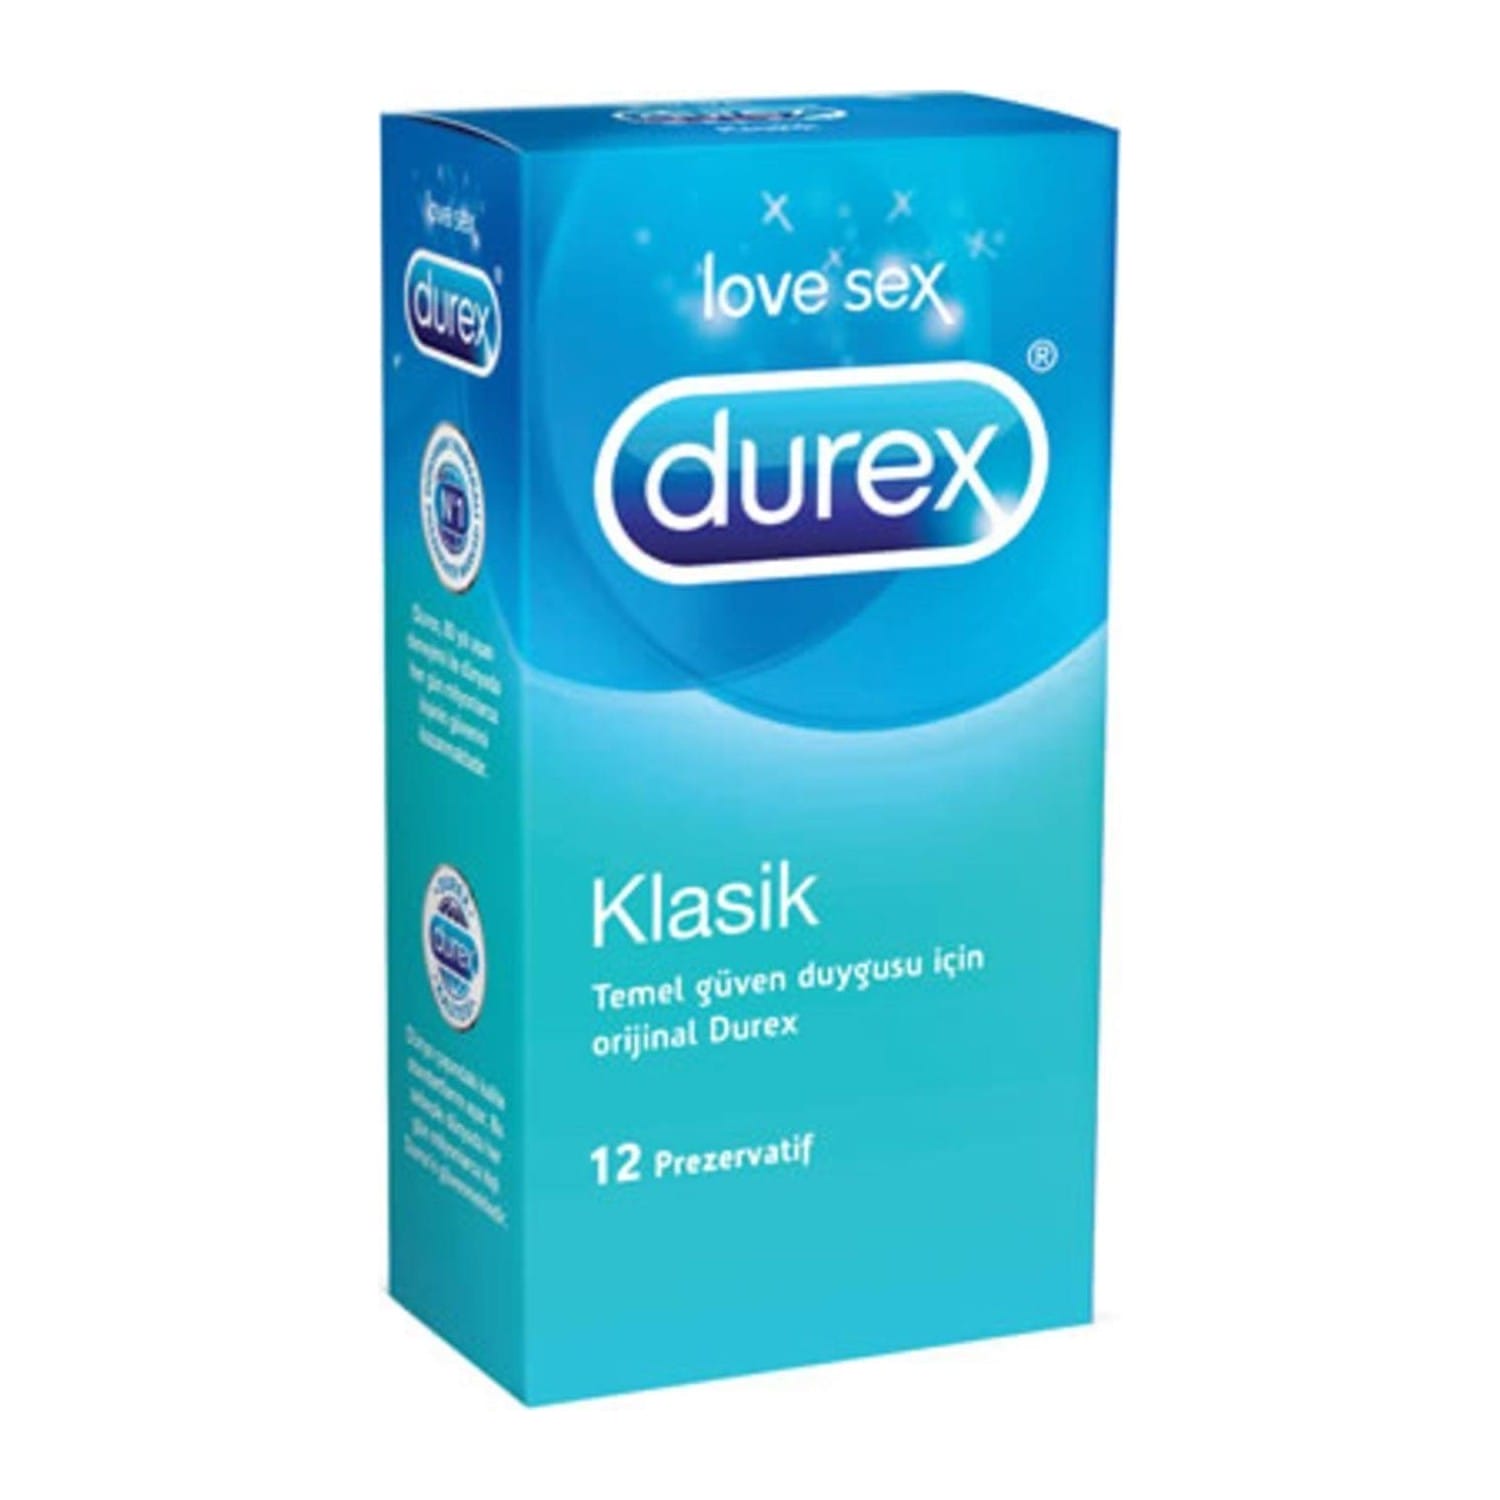 Durex Kondom Klasik 12 Adet